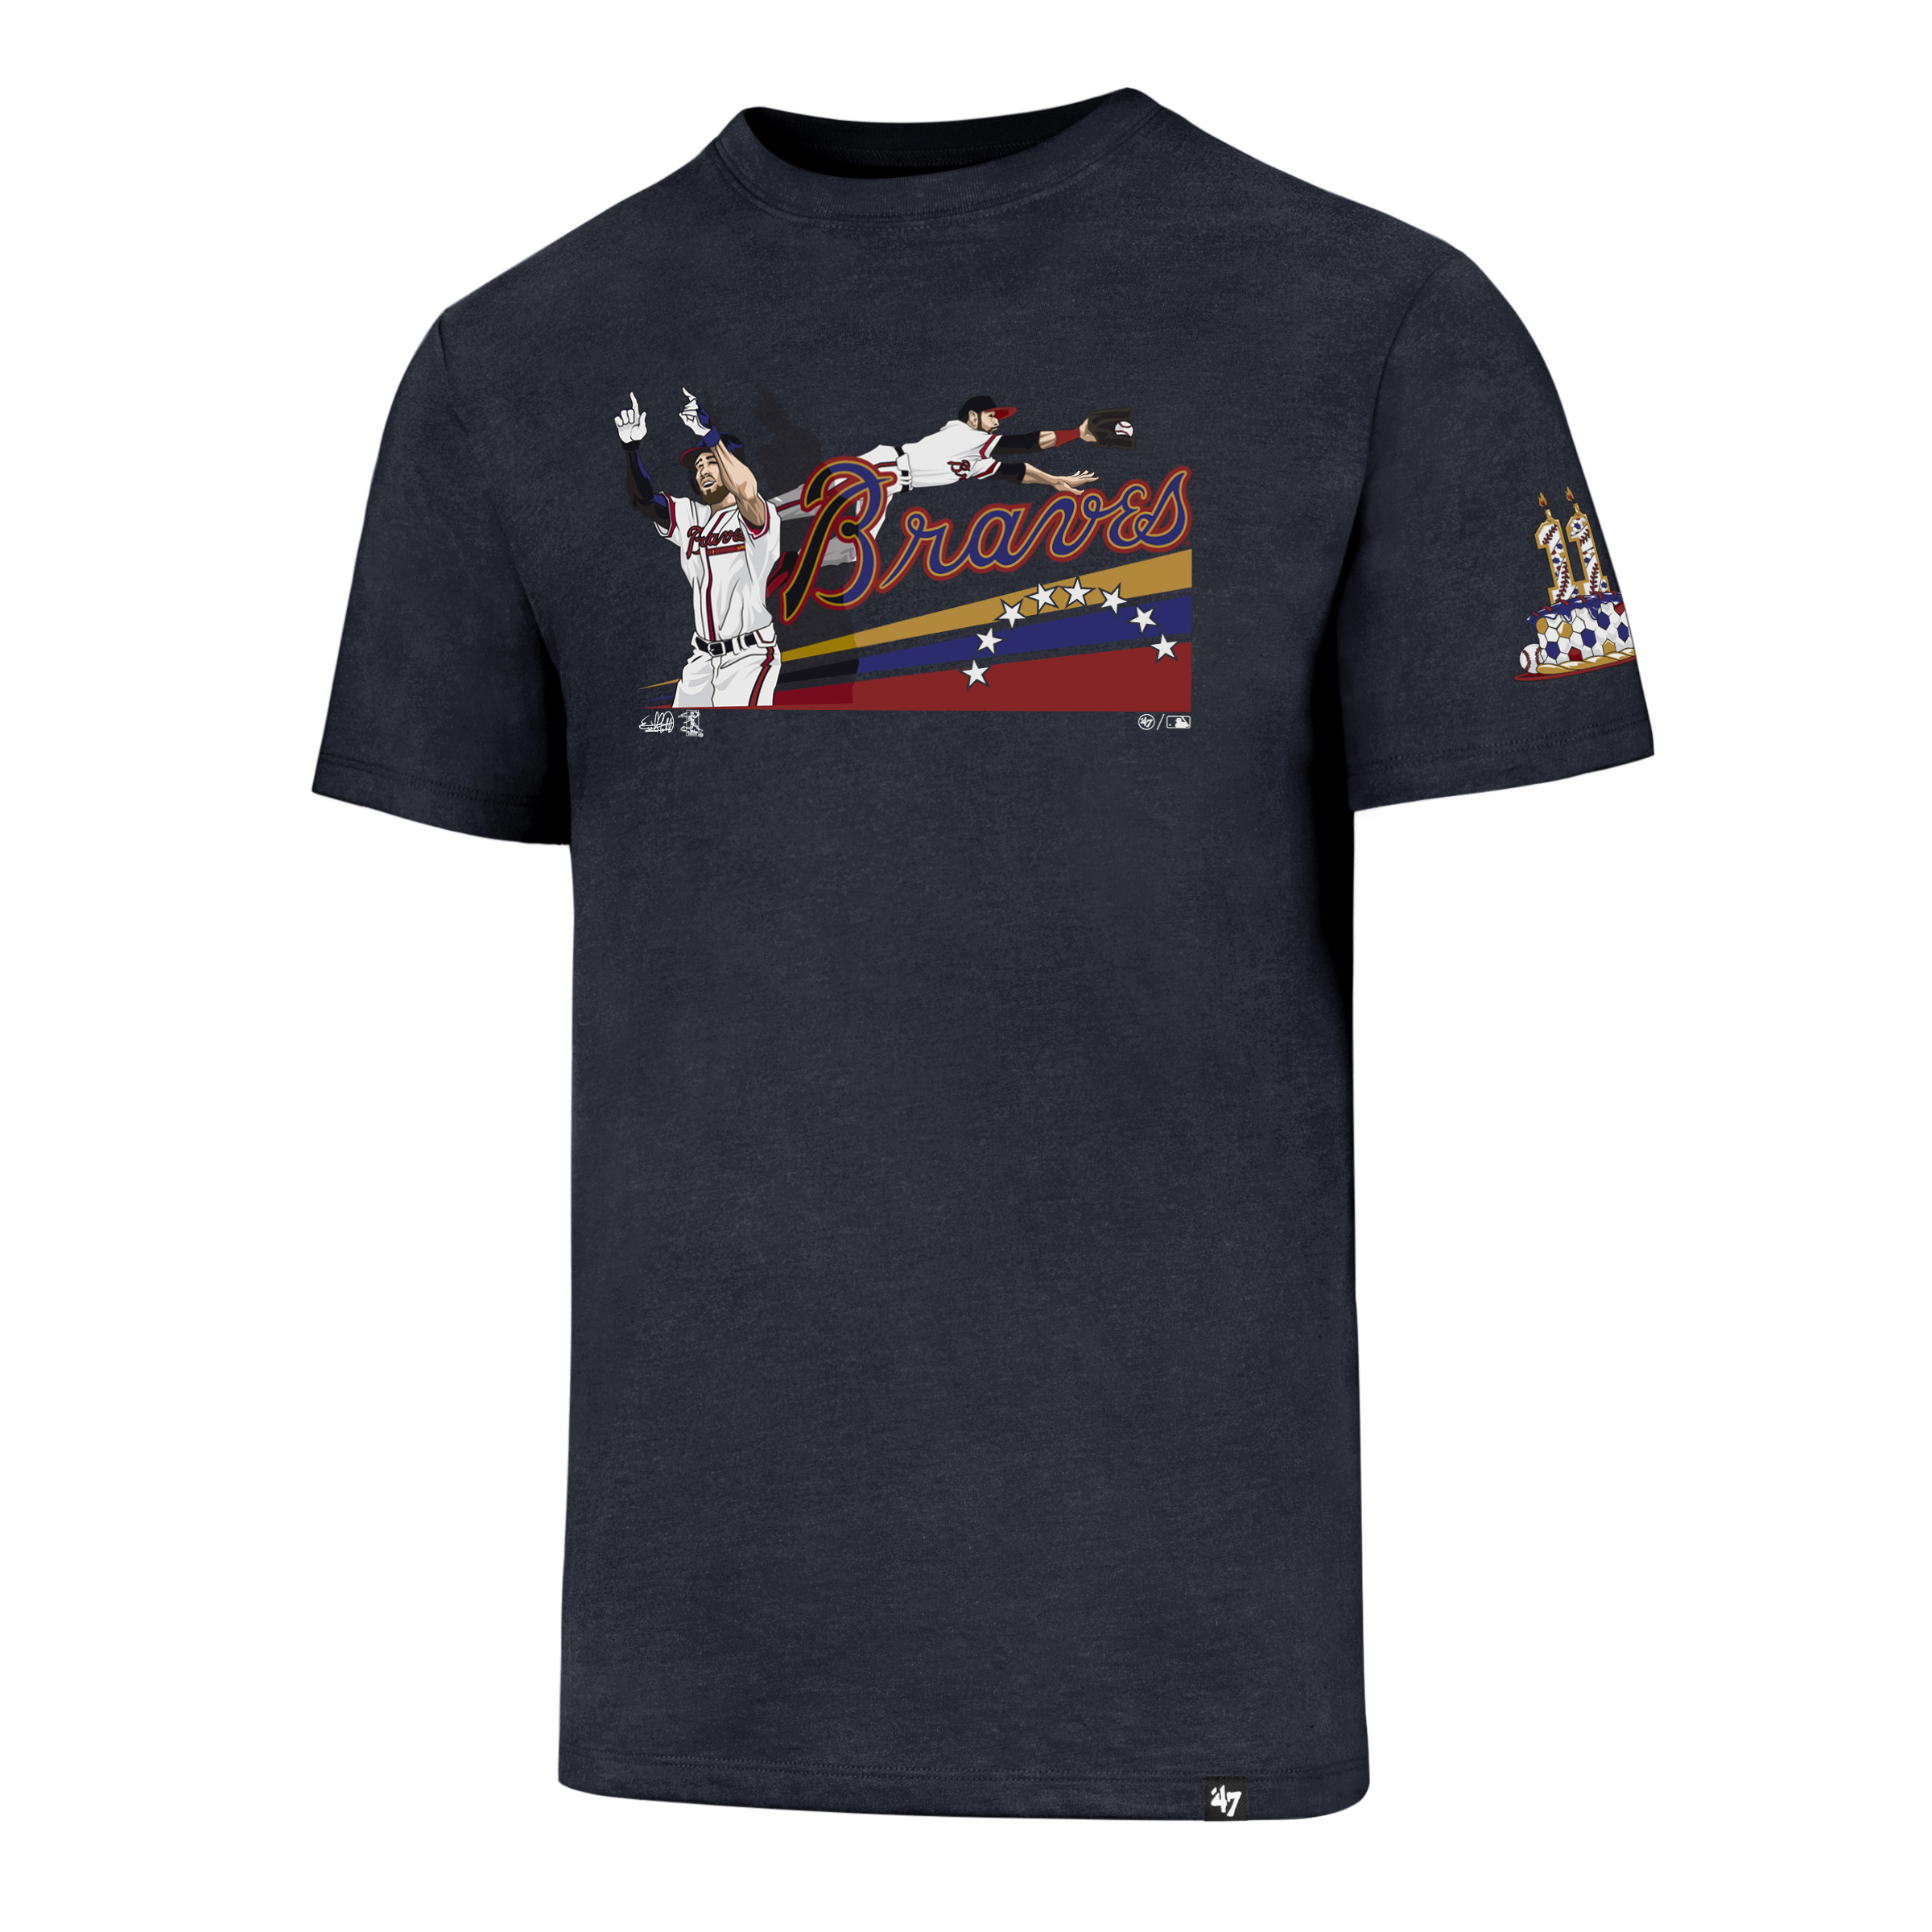 Ender Inciarte unveils Braves T-shirt design